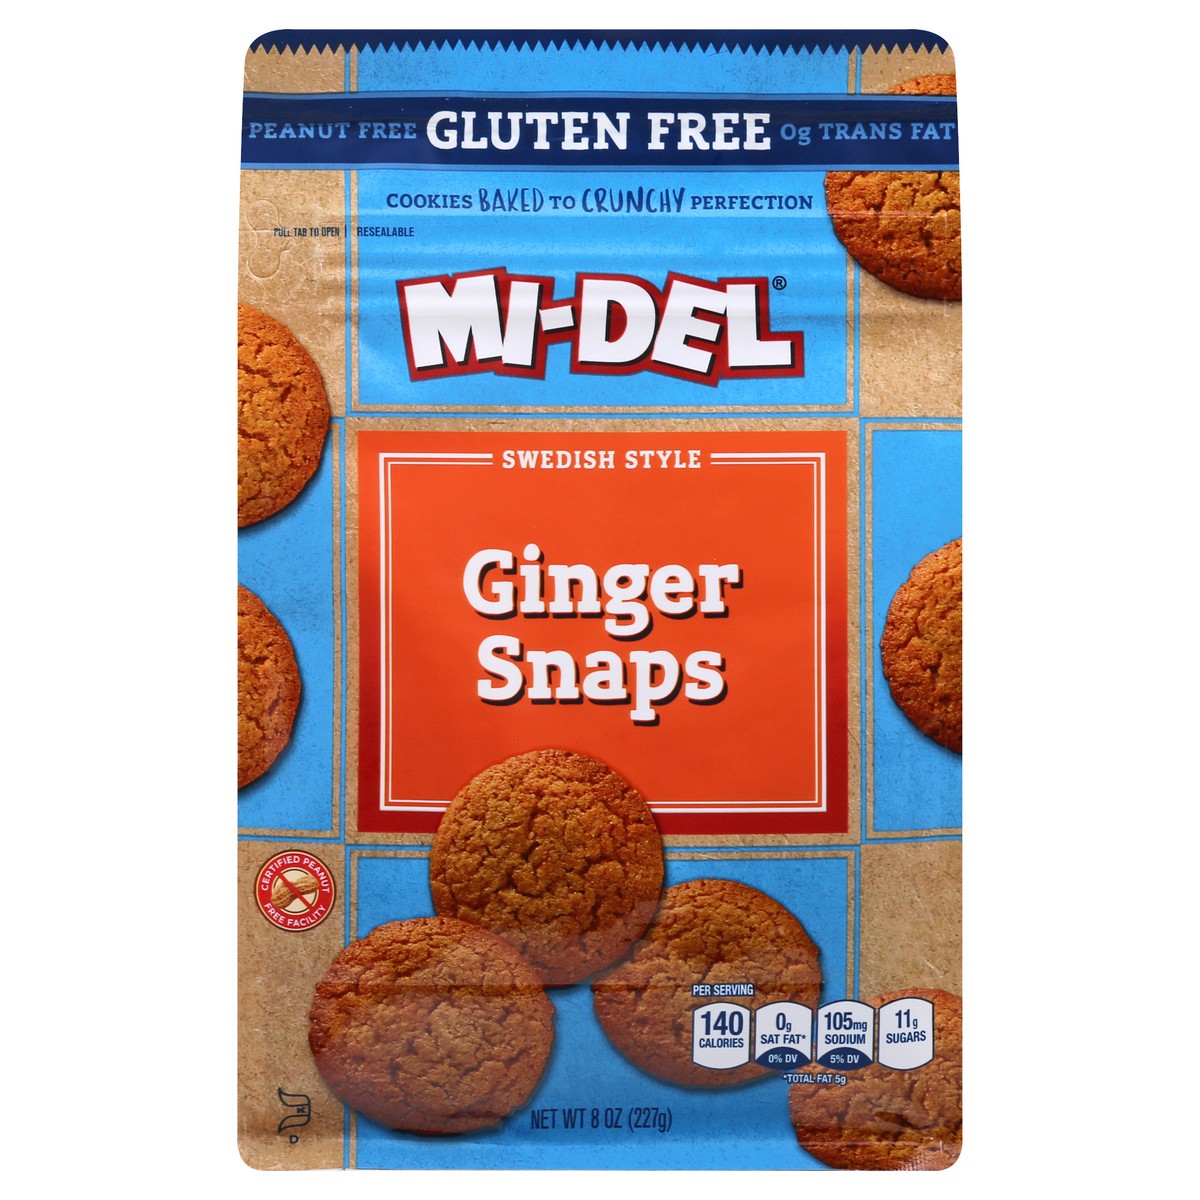 slide 1 of 12, MI-Del Midel Gluten Free Ginger Snaps, 8 oz